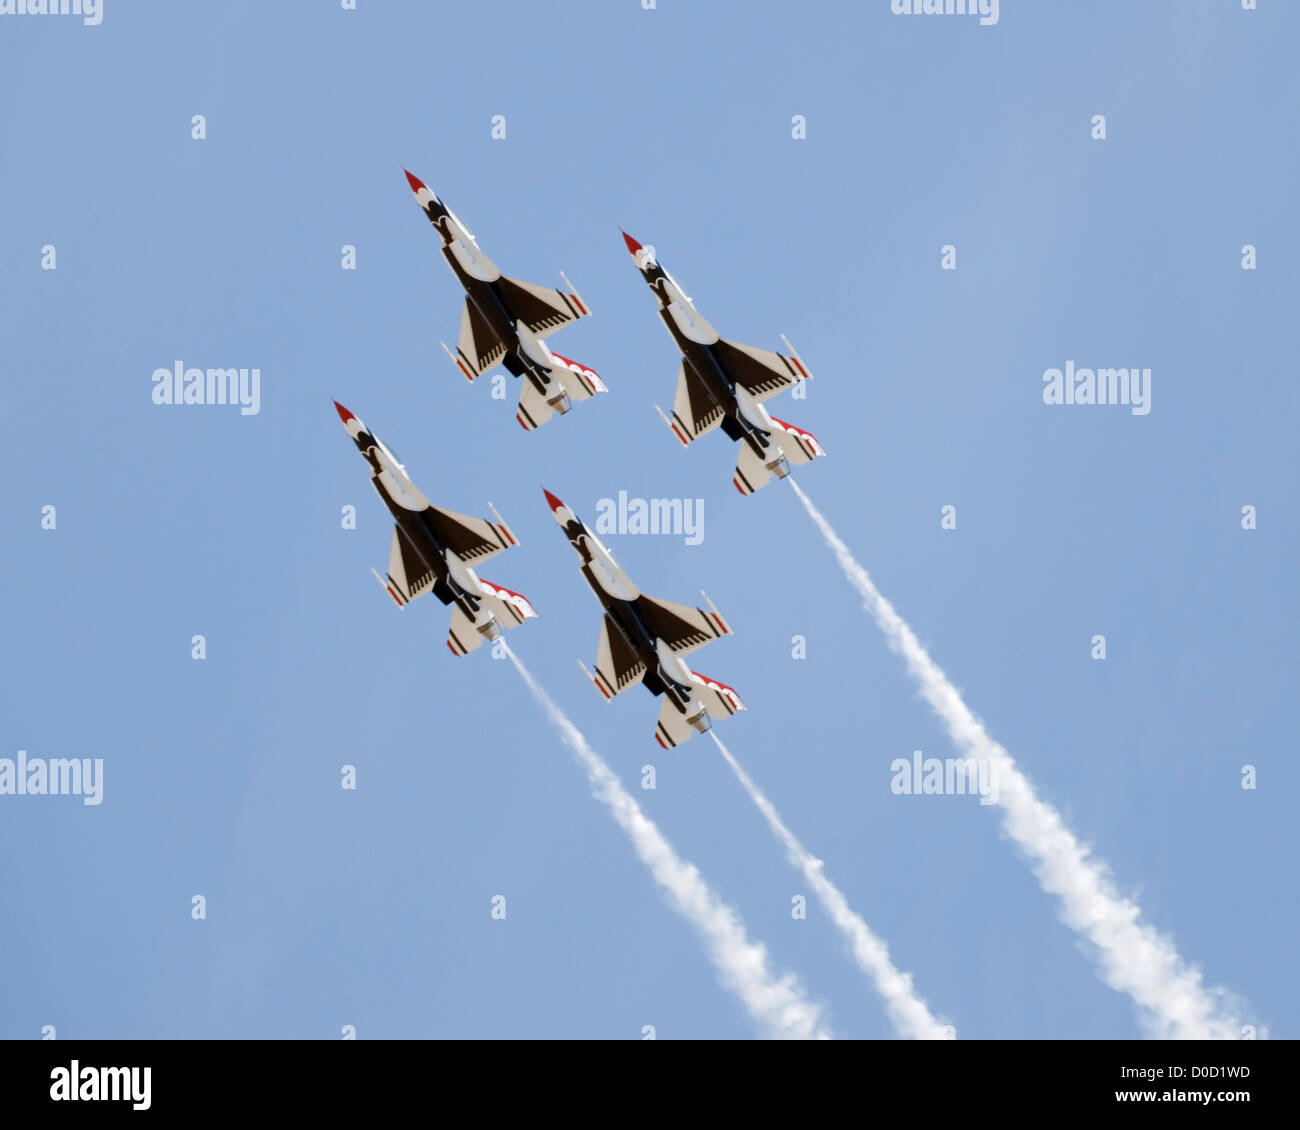 US Air Force Thunderbird Demonstration Team Stock Photo